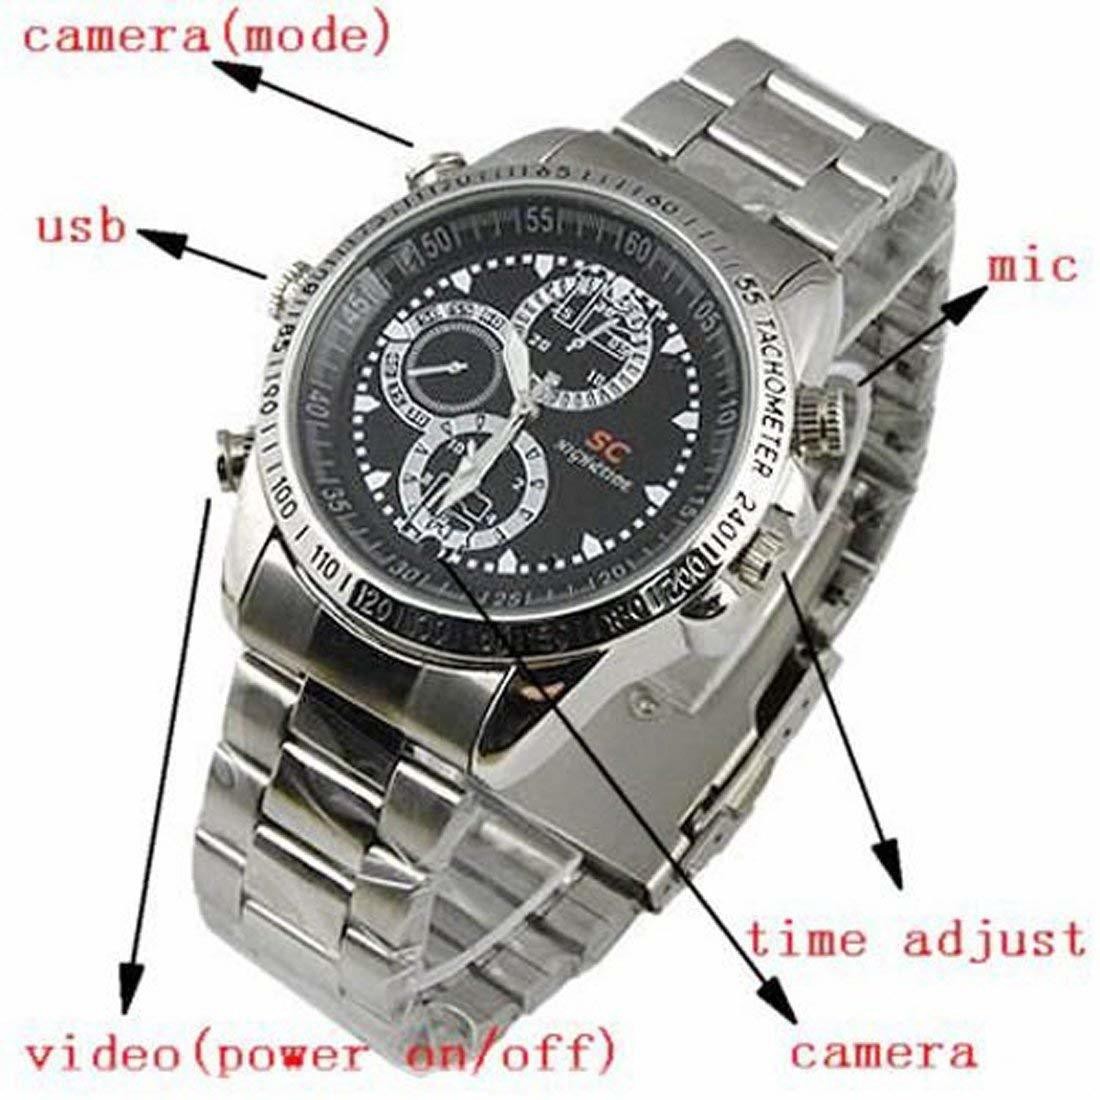 video wrist watch camera